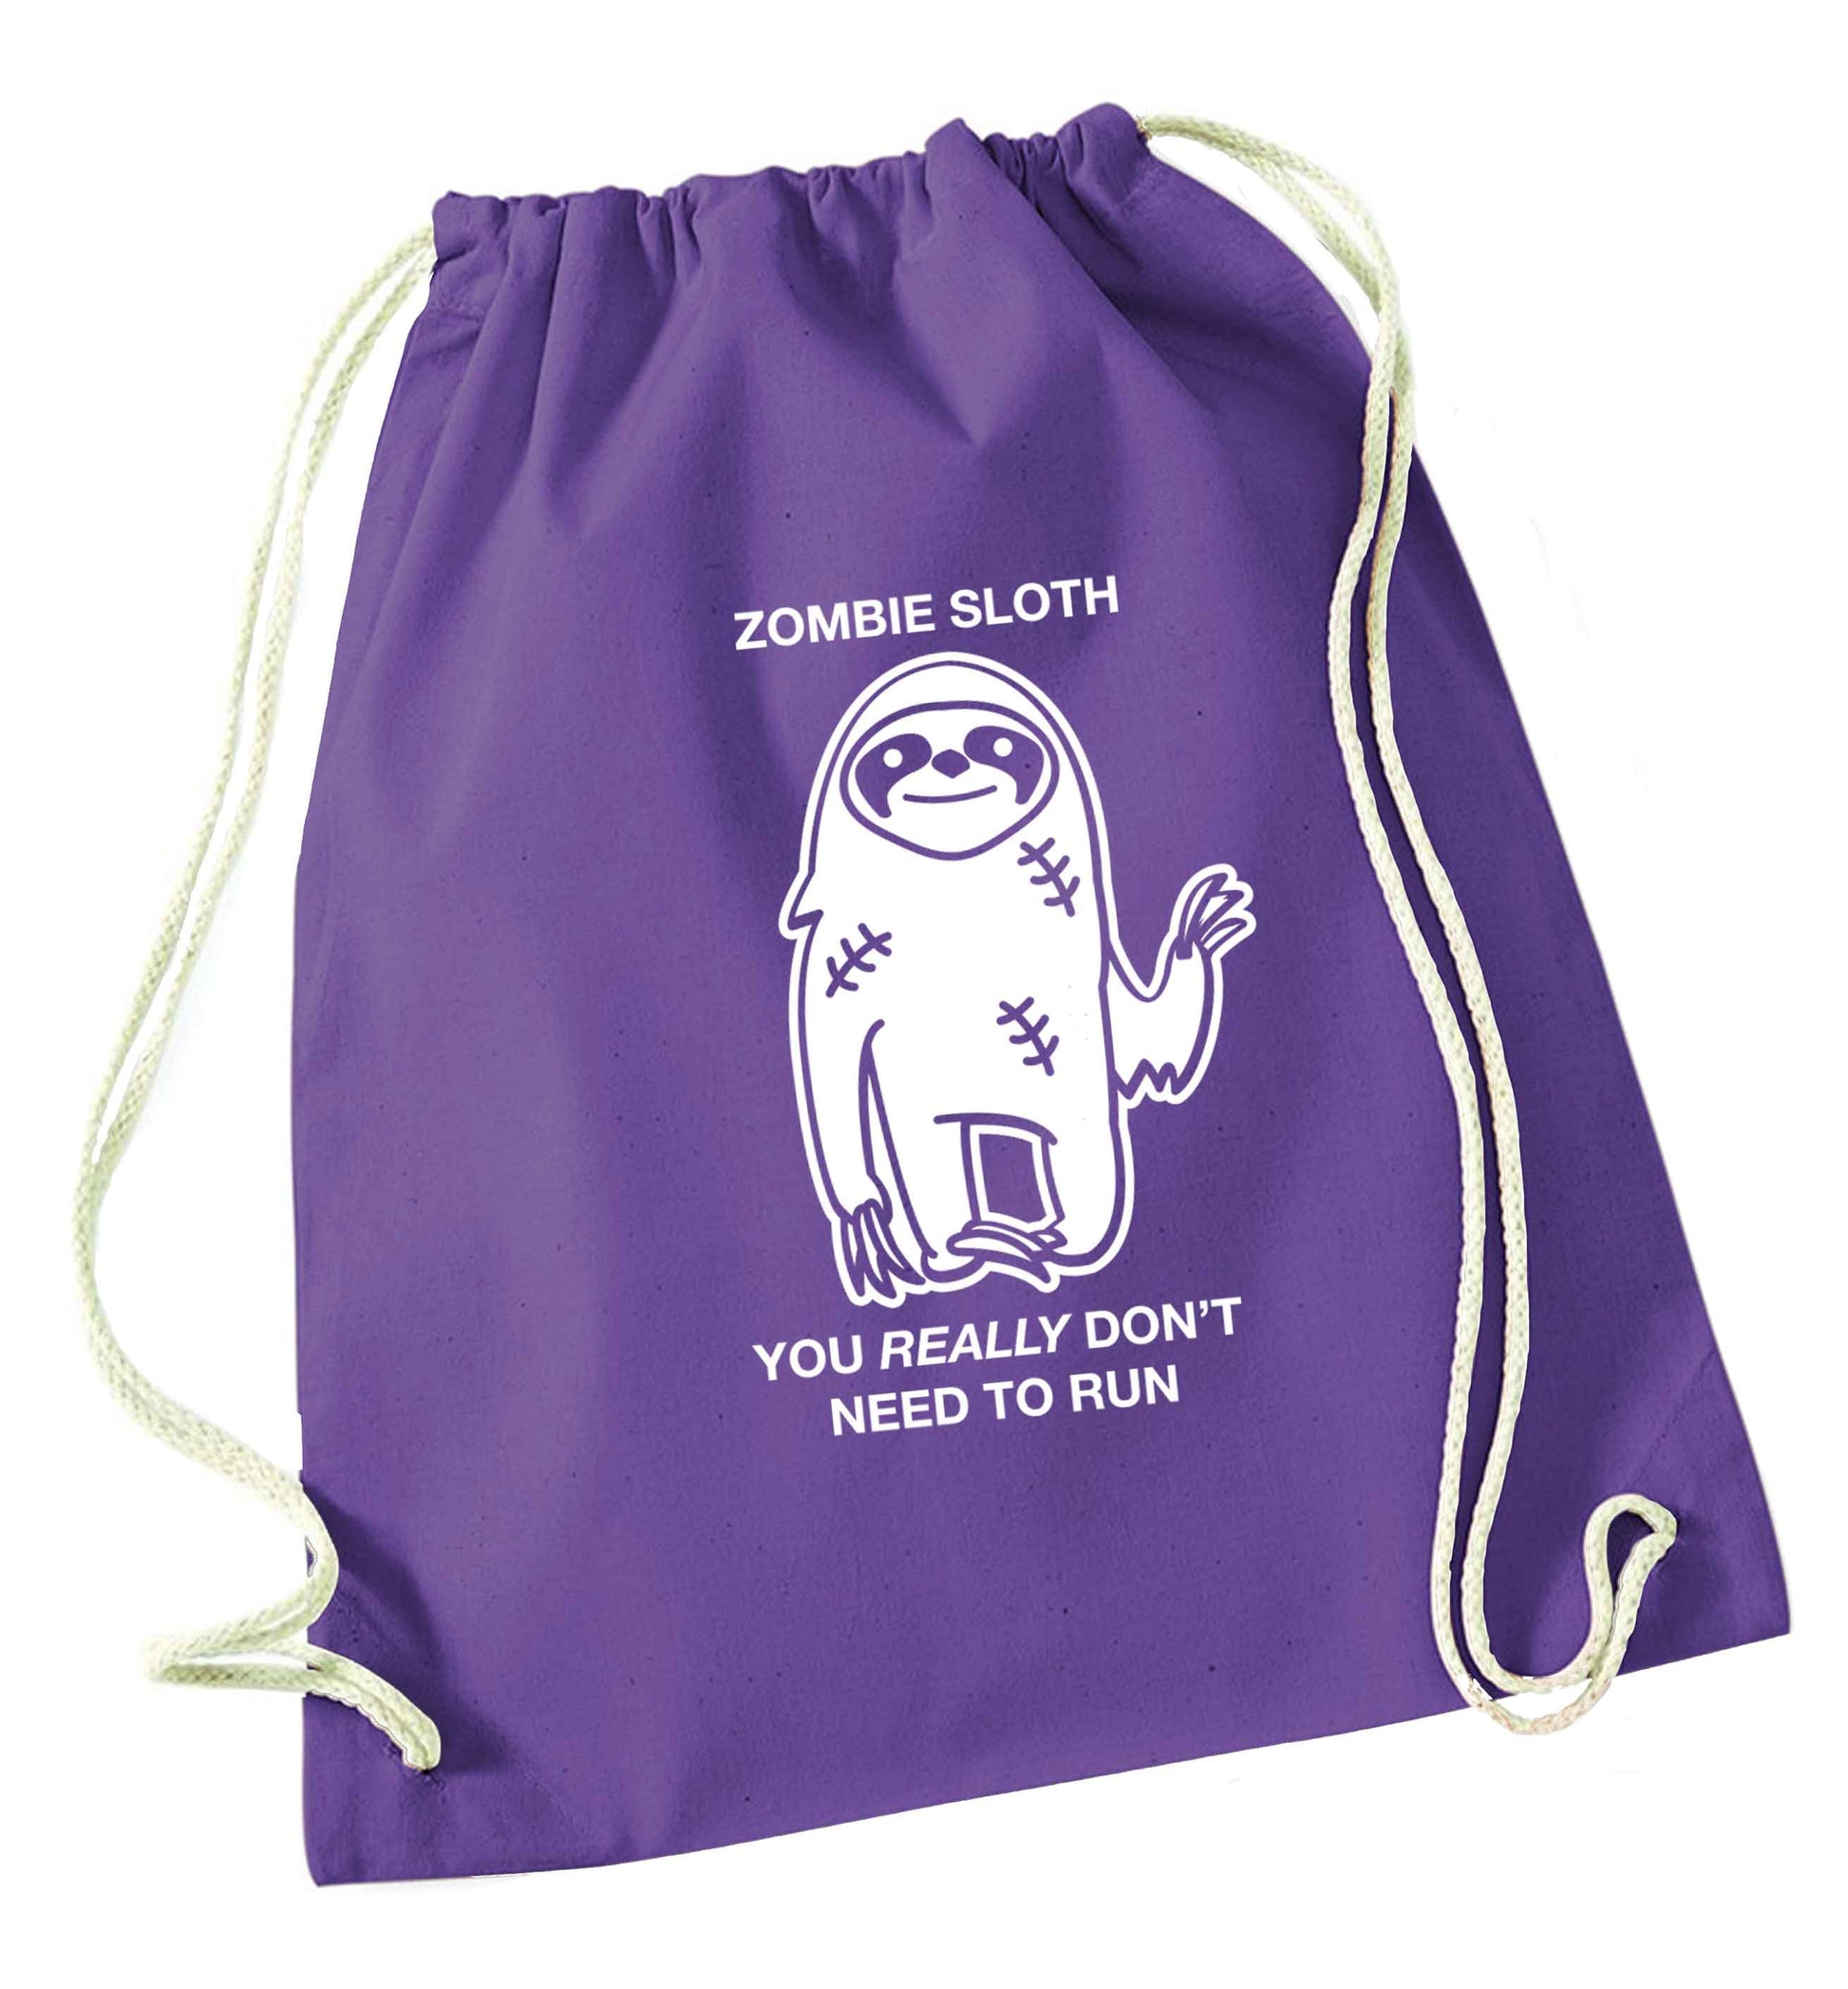 Zombie sloth you really don't need to run purple drawstring bag